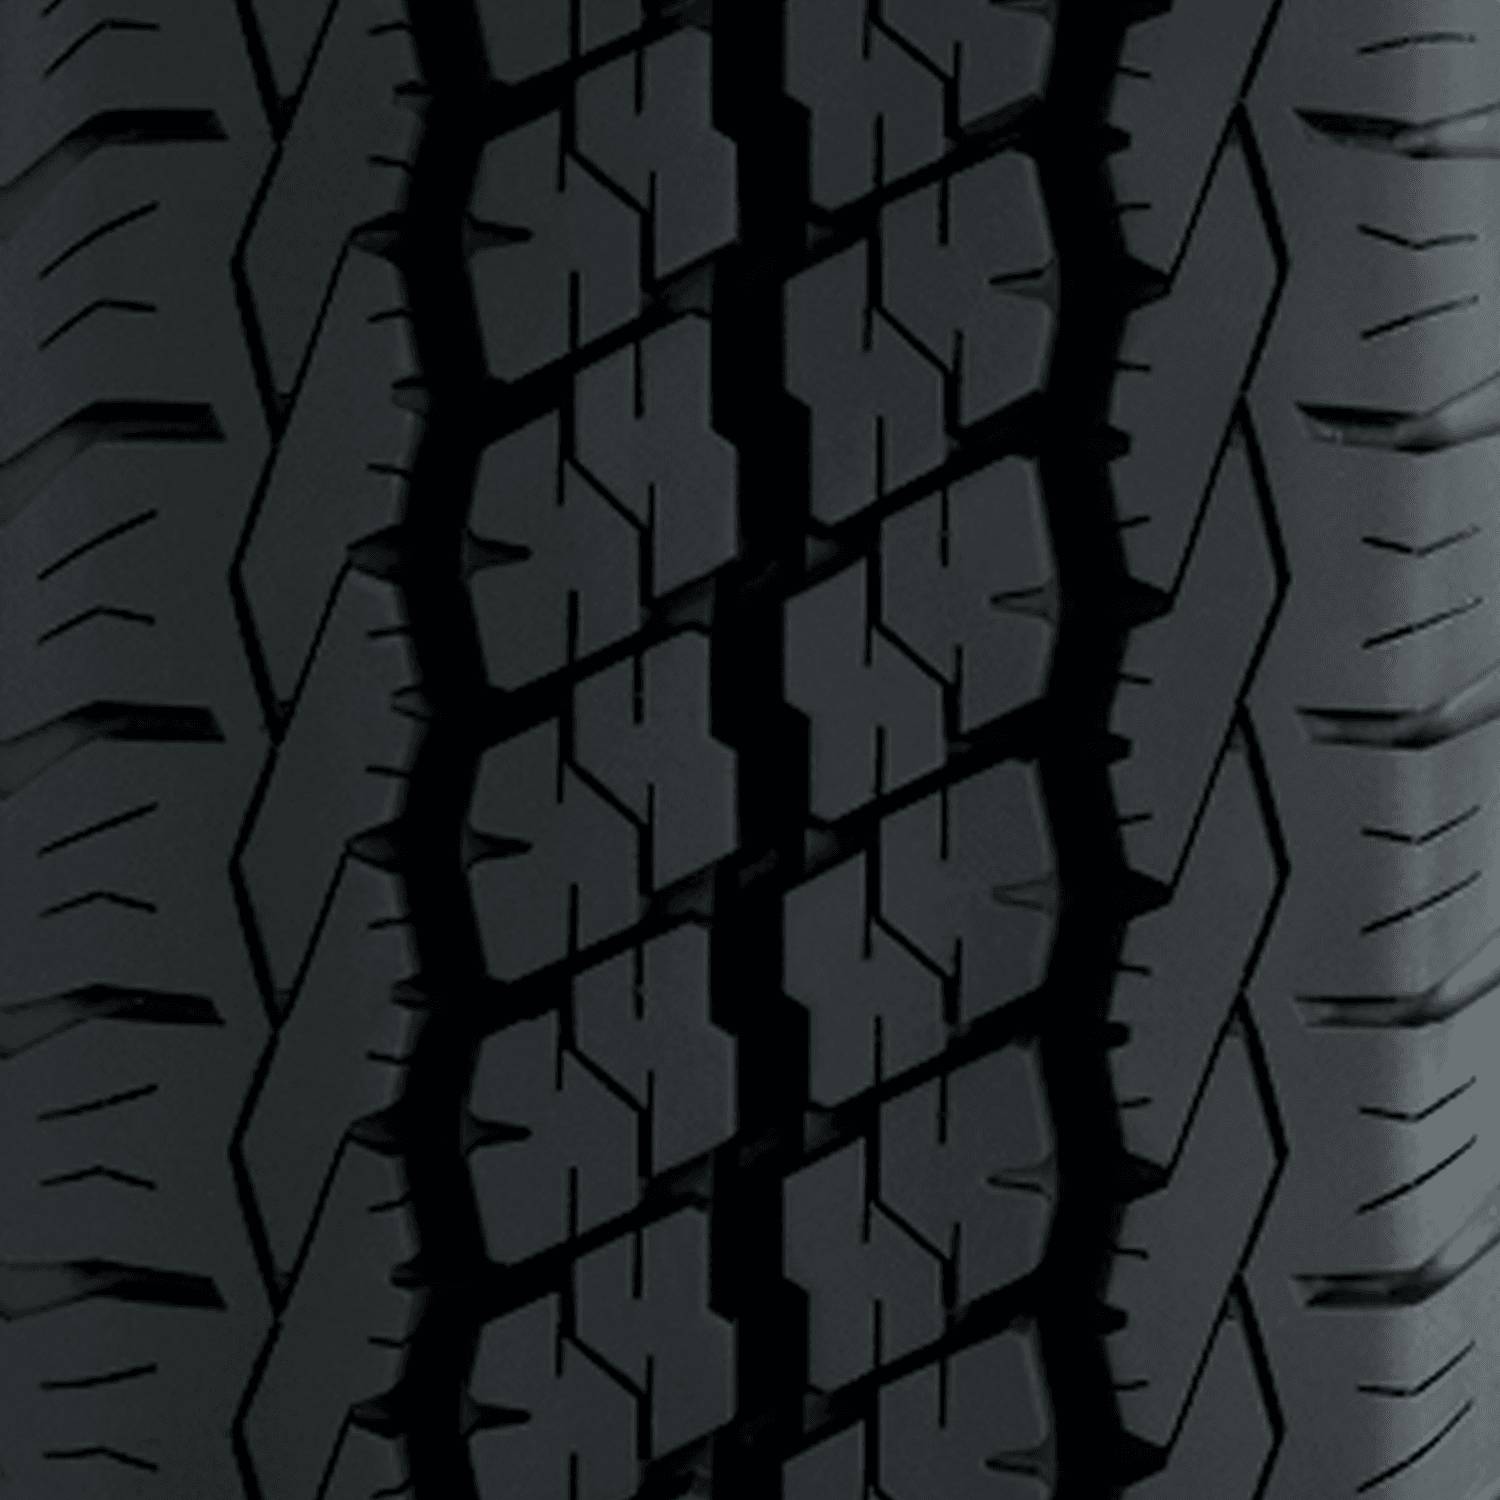 Bridgestone Duravis R500 HD All Season LT265/70R17 121/118R E Light Truck Tire - image 4 of 7